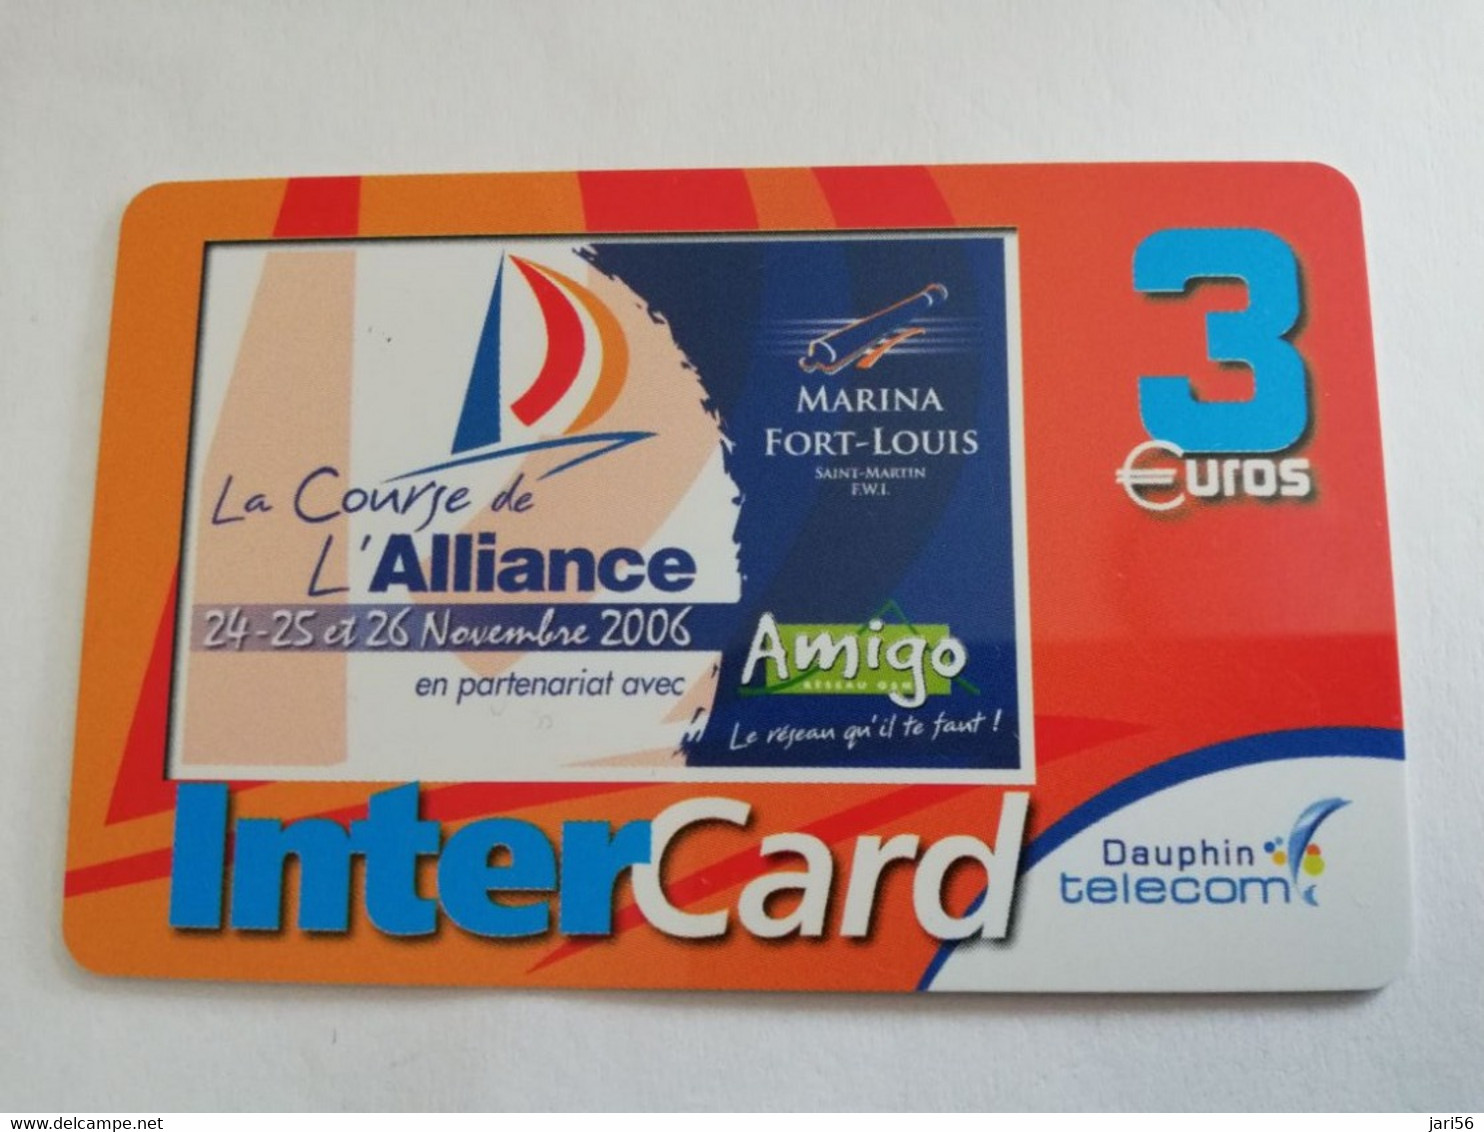 ST MARTIN / INTERCARD  3 EURO    LE COURSE DE ALLIANCE          NO 156   Fine Used Card    ** 6605 ** - Antilles (Françaises)